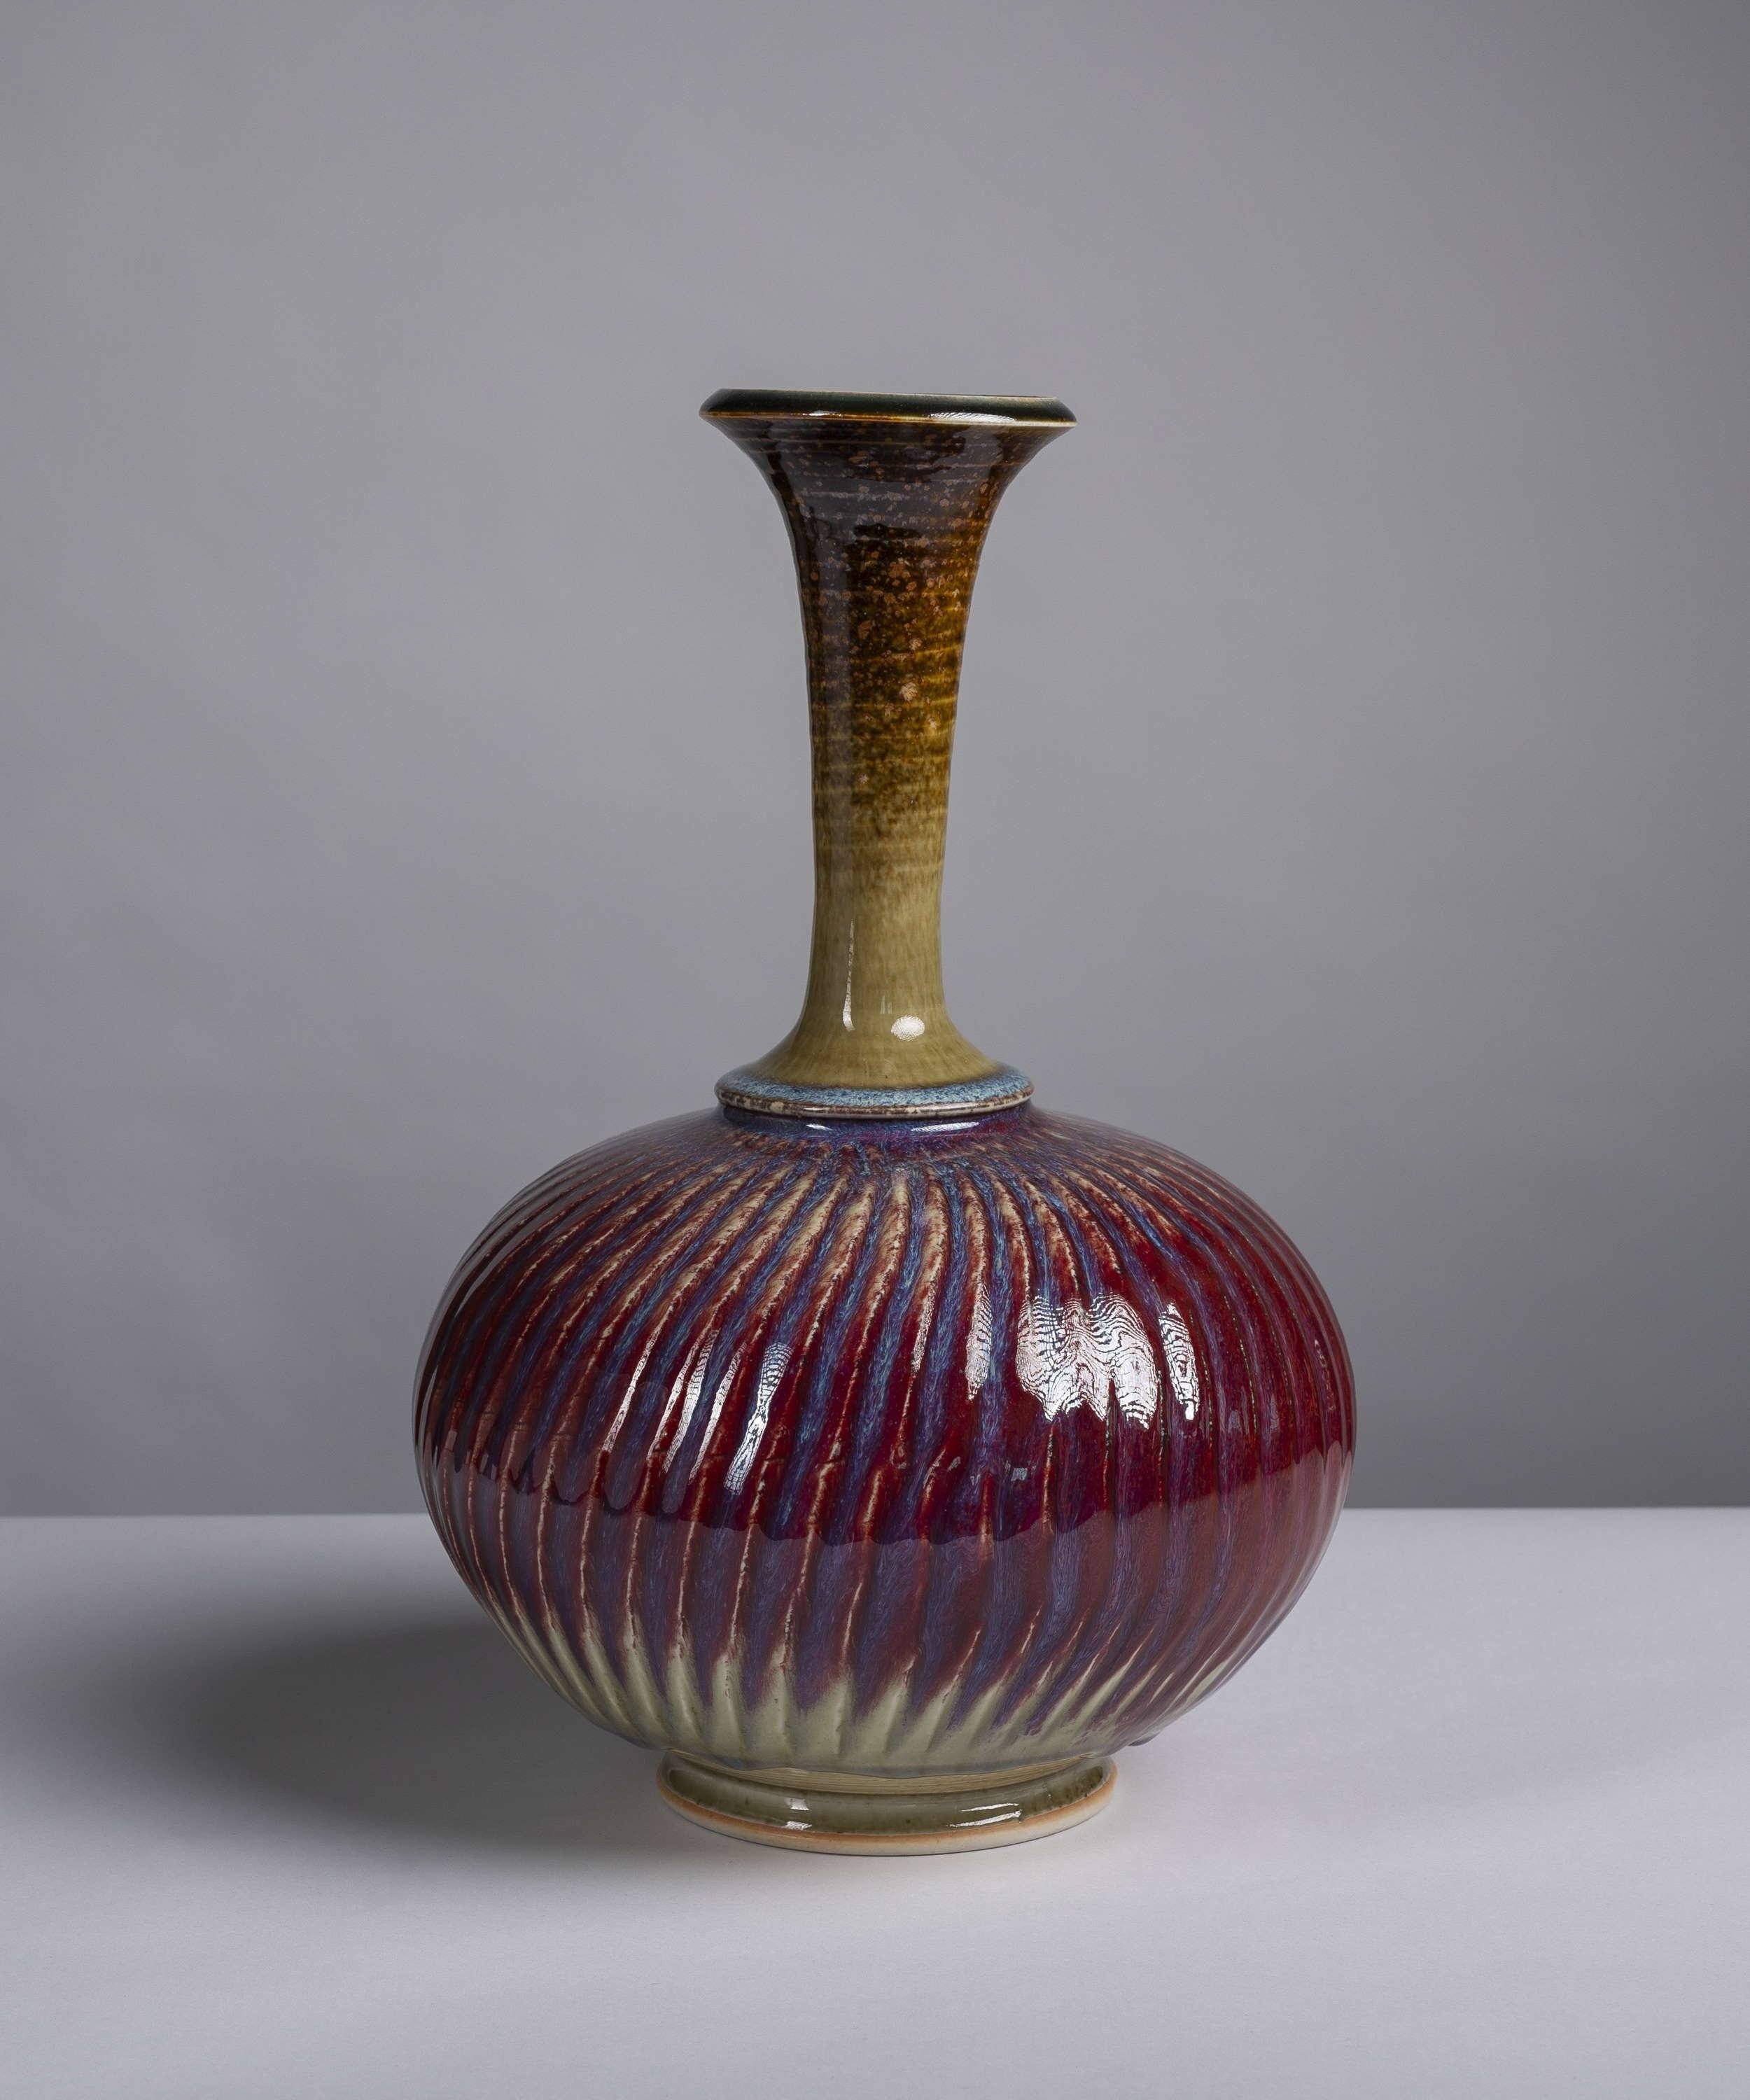  Joseph Panacci   Long neck vase    Woodfired  37.5 cm ht 